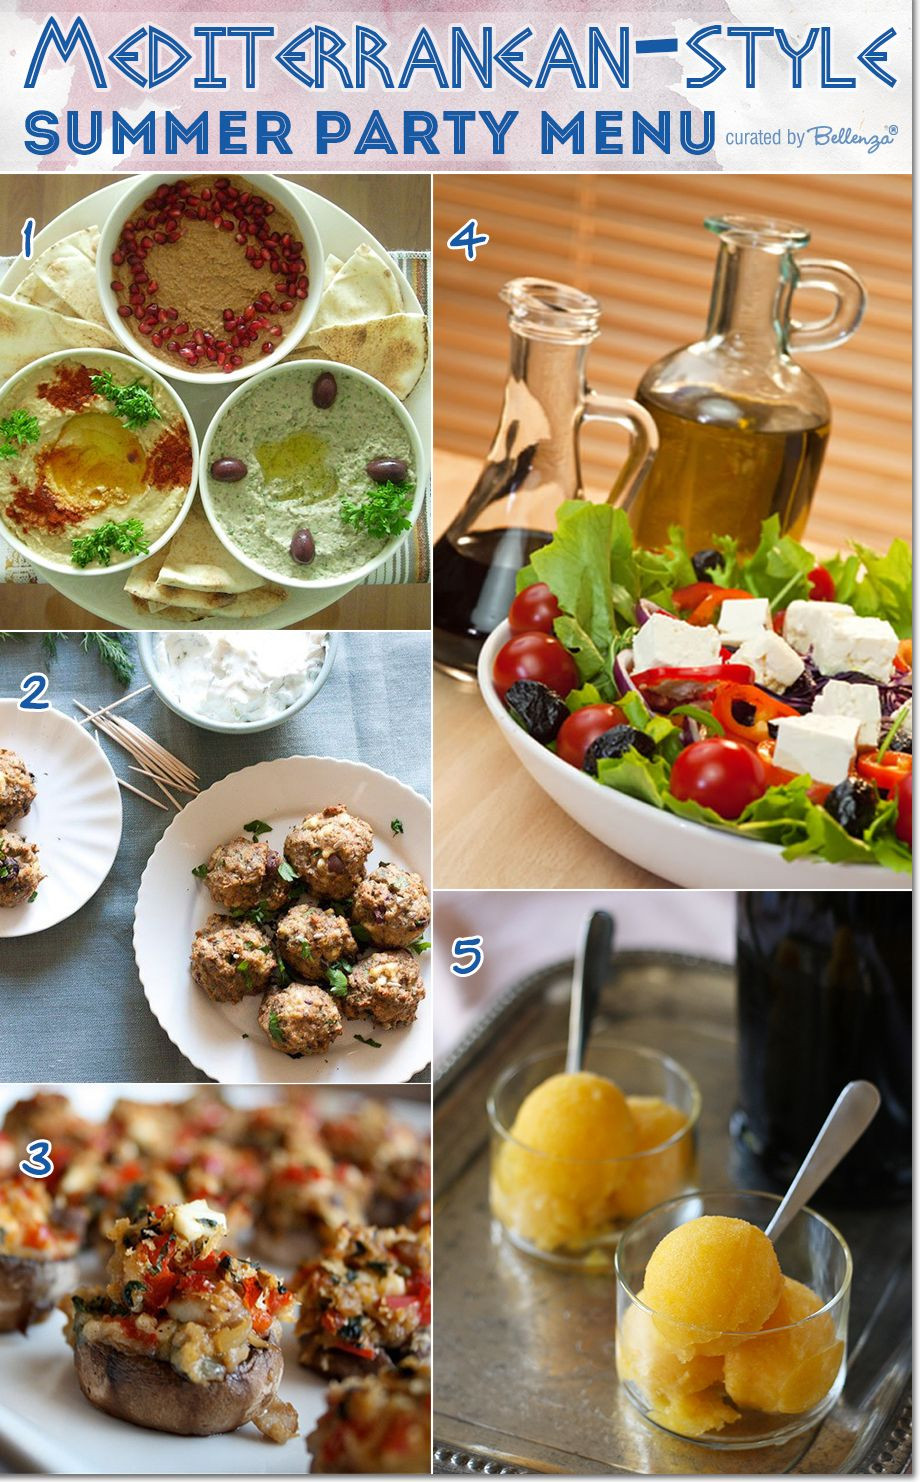 Summer Party Dinner Menu Ideas
 Menu Ideas for Hosting a Mediterranean style Summer Party